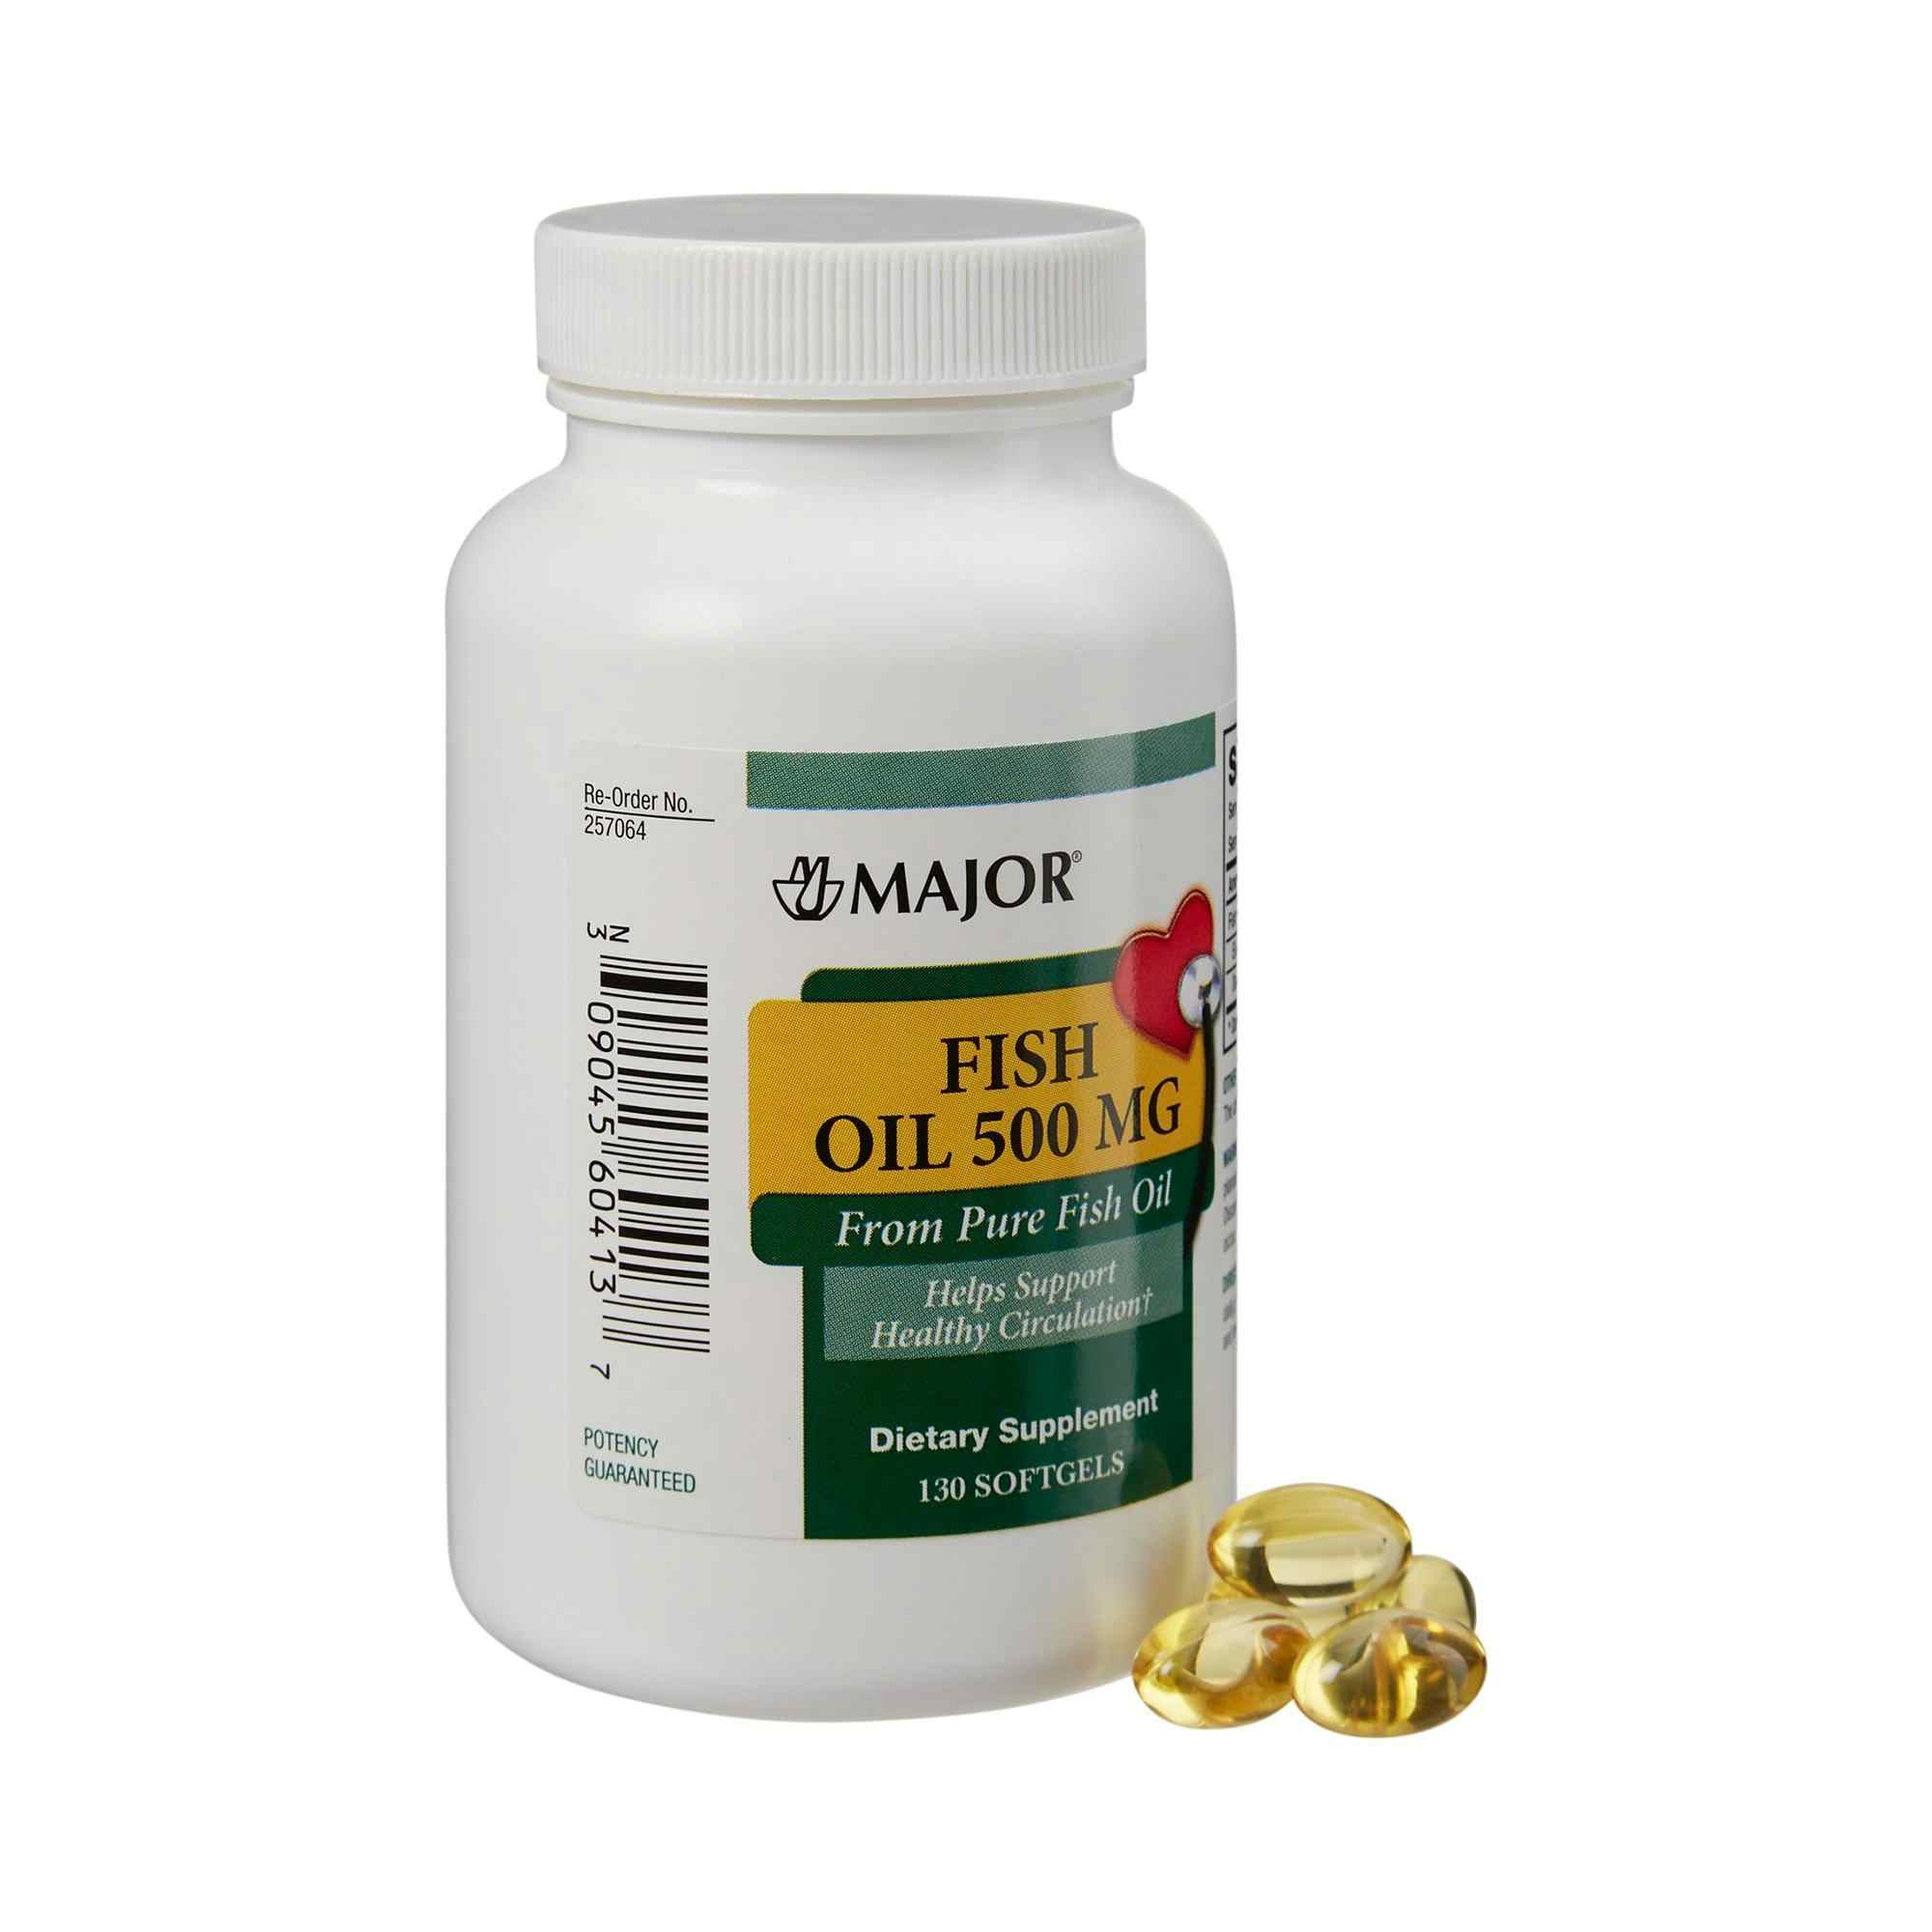 Major Fish Oil Dietary Supplement, 500 mg, 130 Softgels, 904560413, 1 Bottle